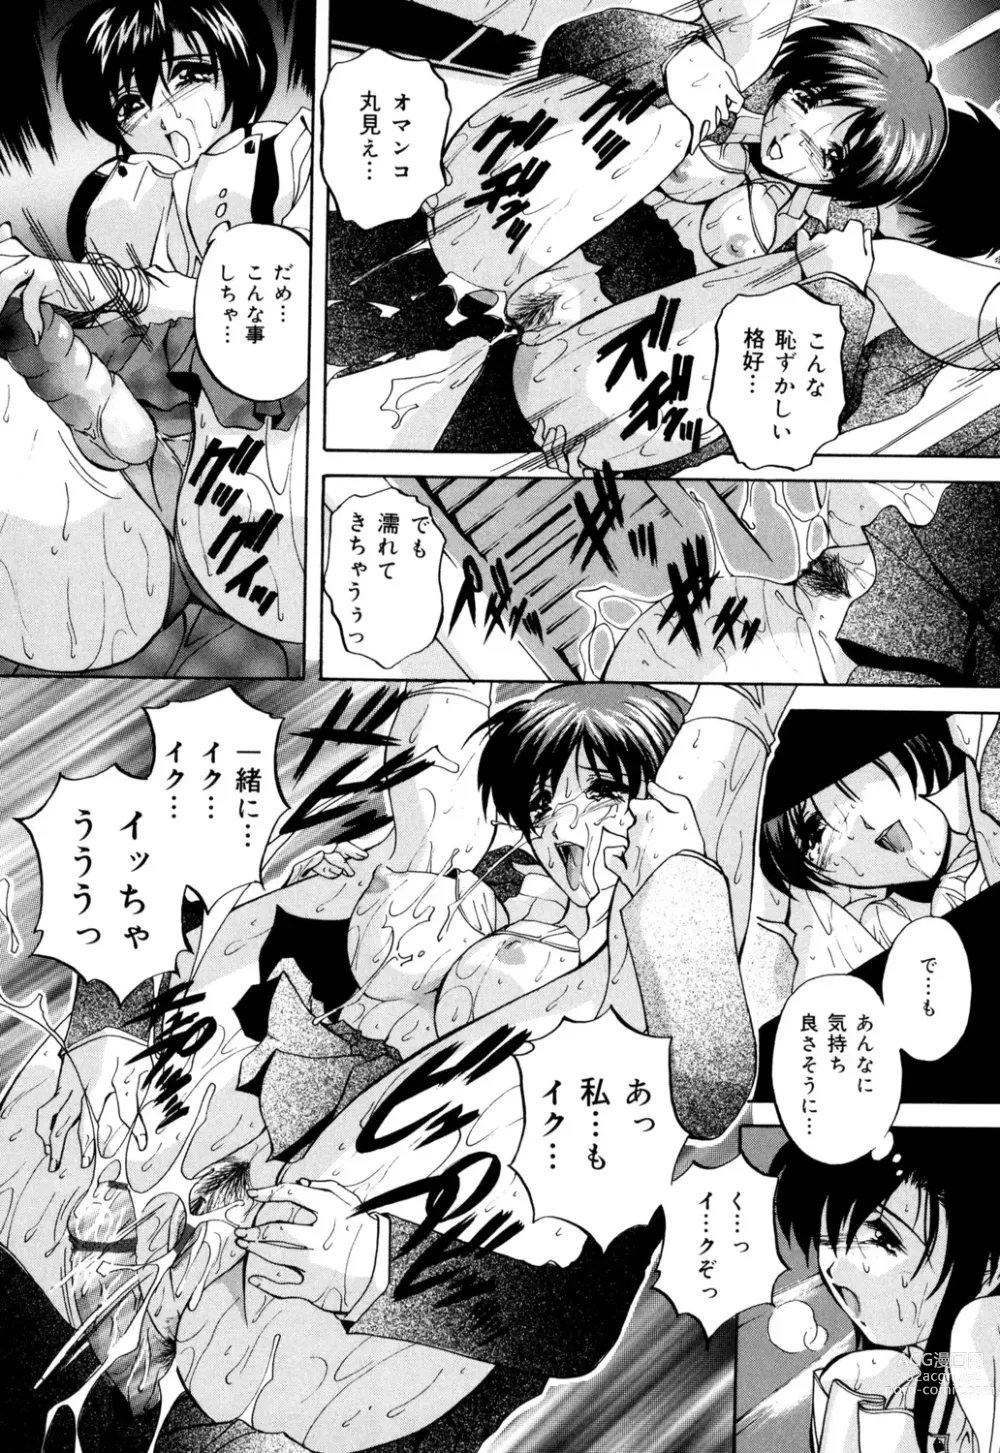 Page 151 of manga Kinshin Soukan Musume